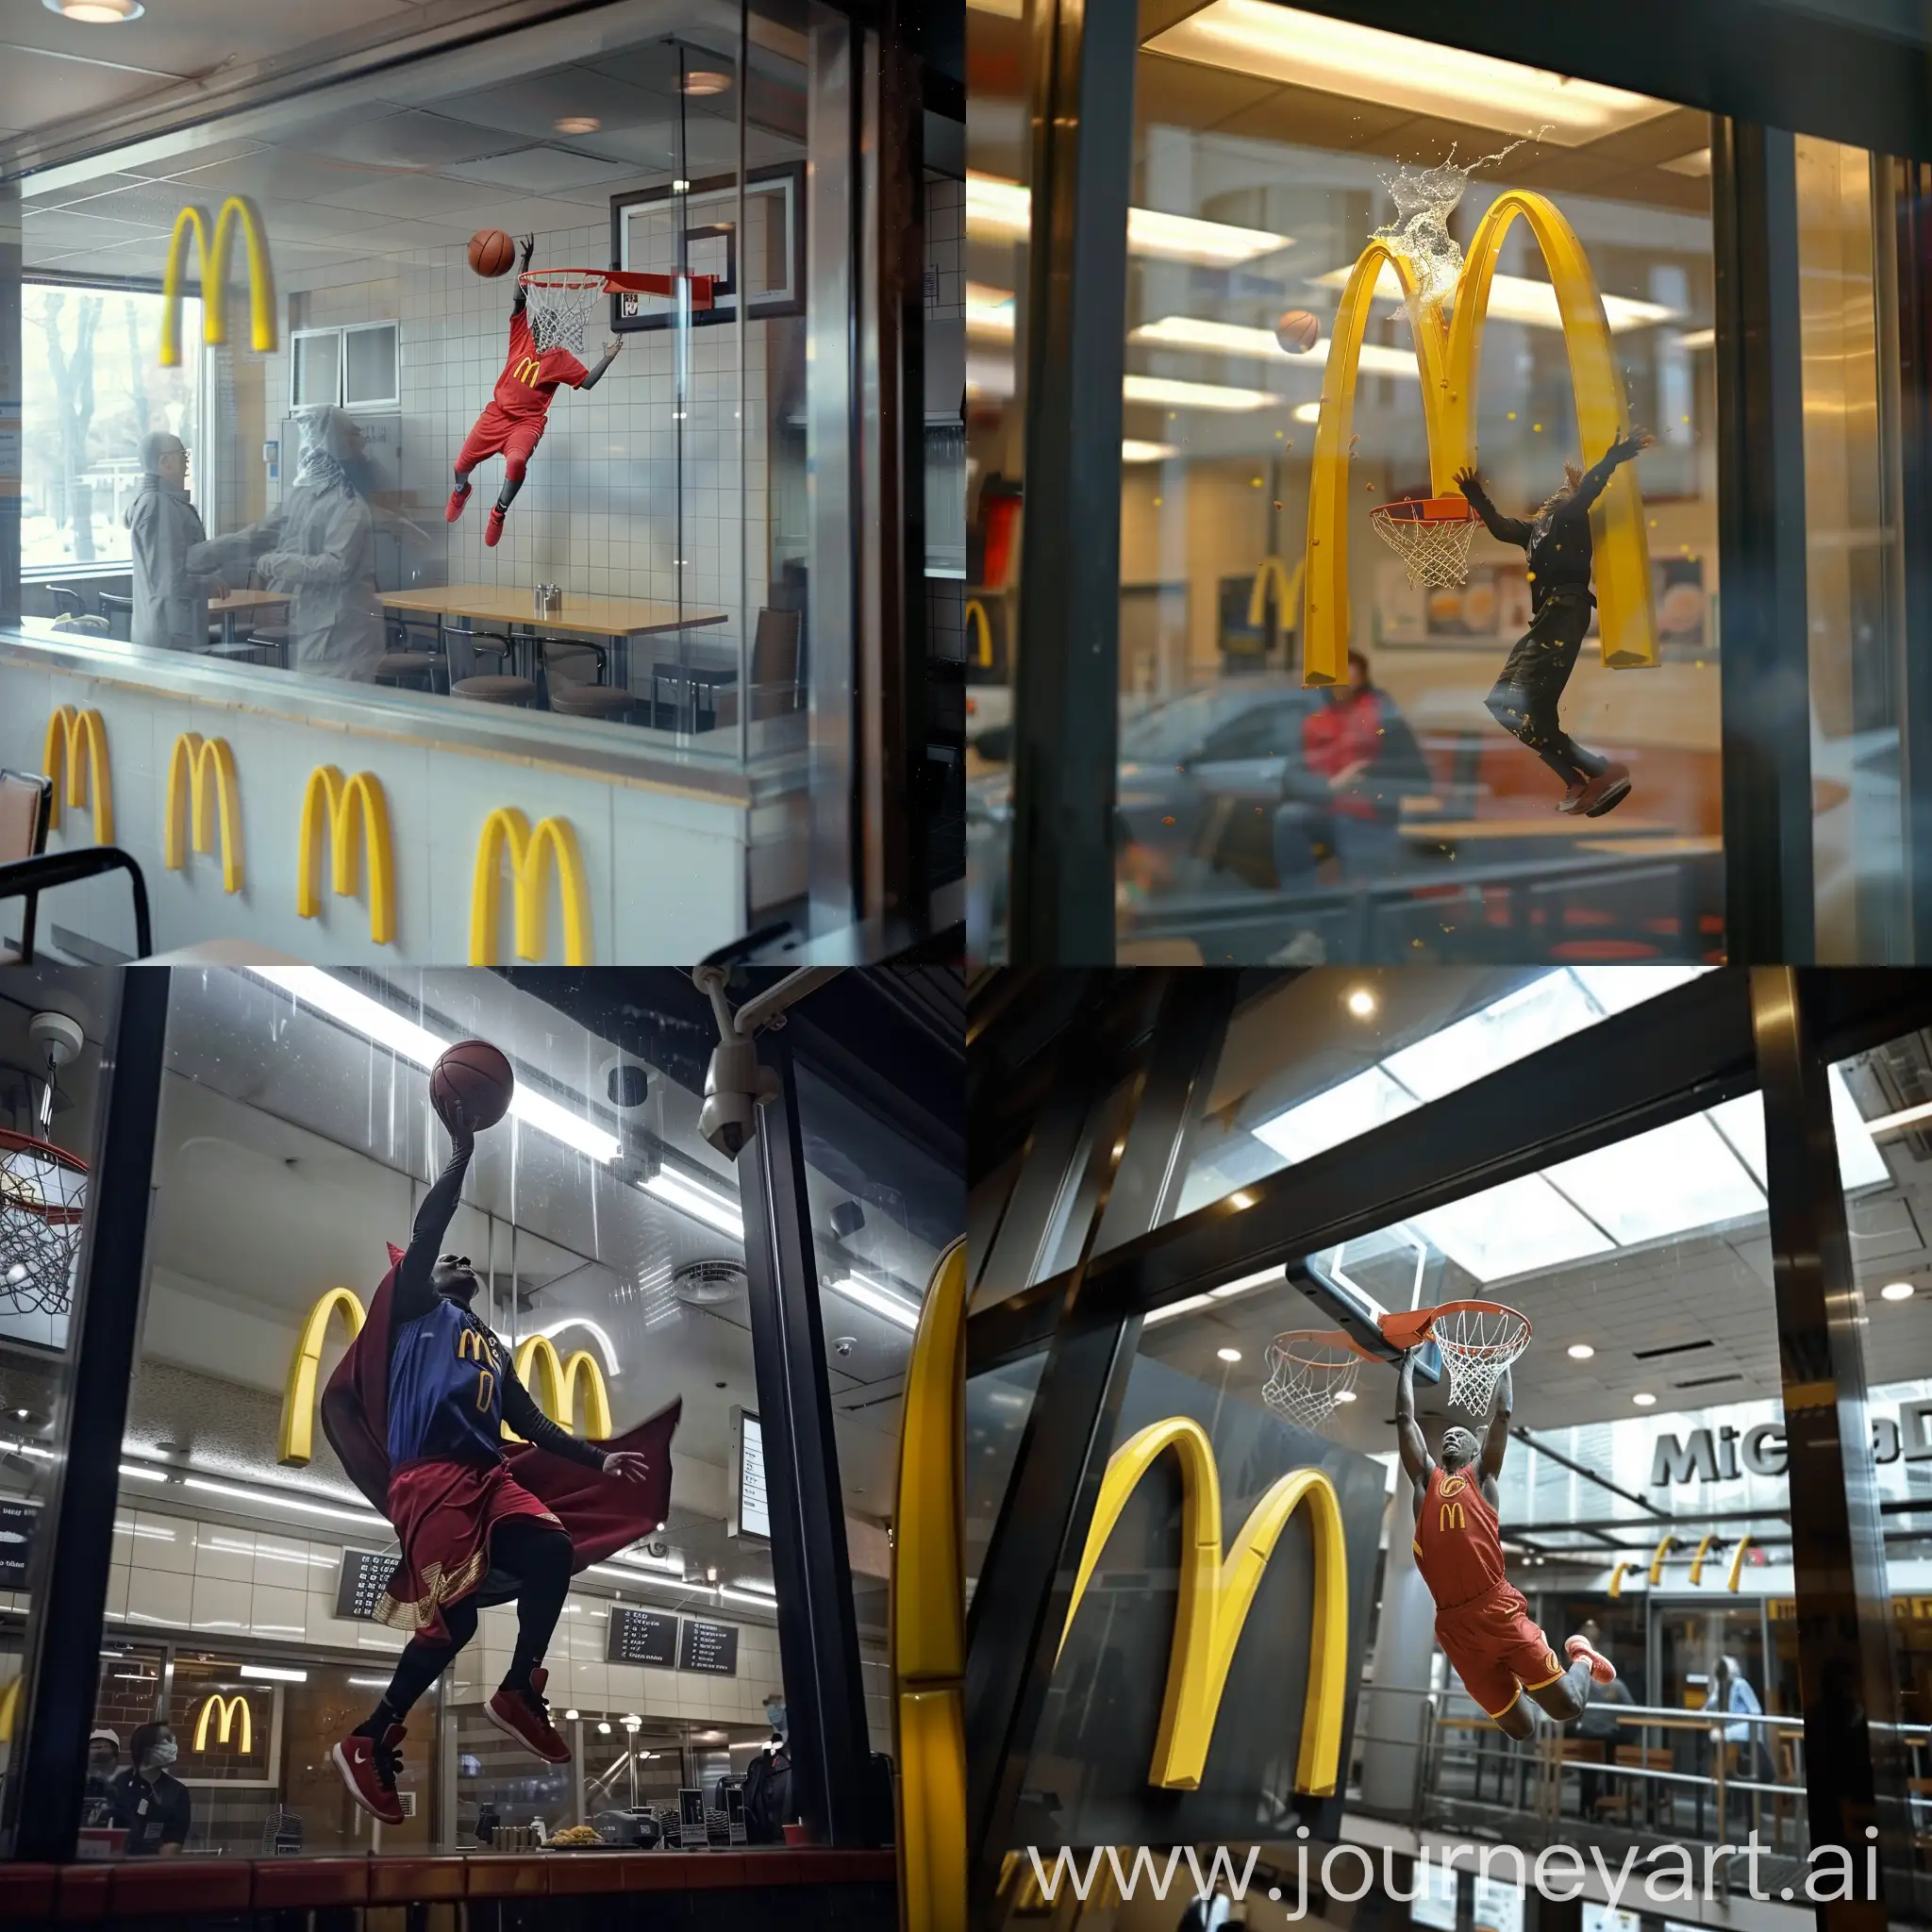 Wizard-Basketball-Game-in-McDonalds-Surveillance-Footage